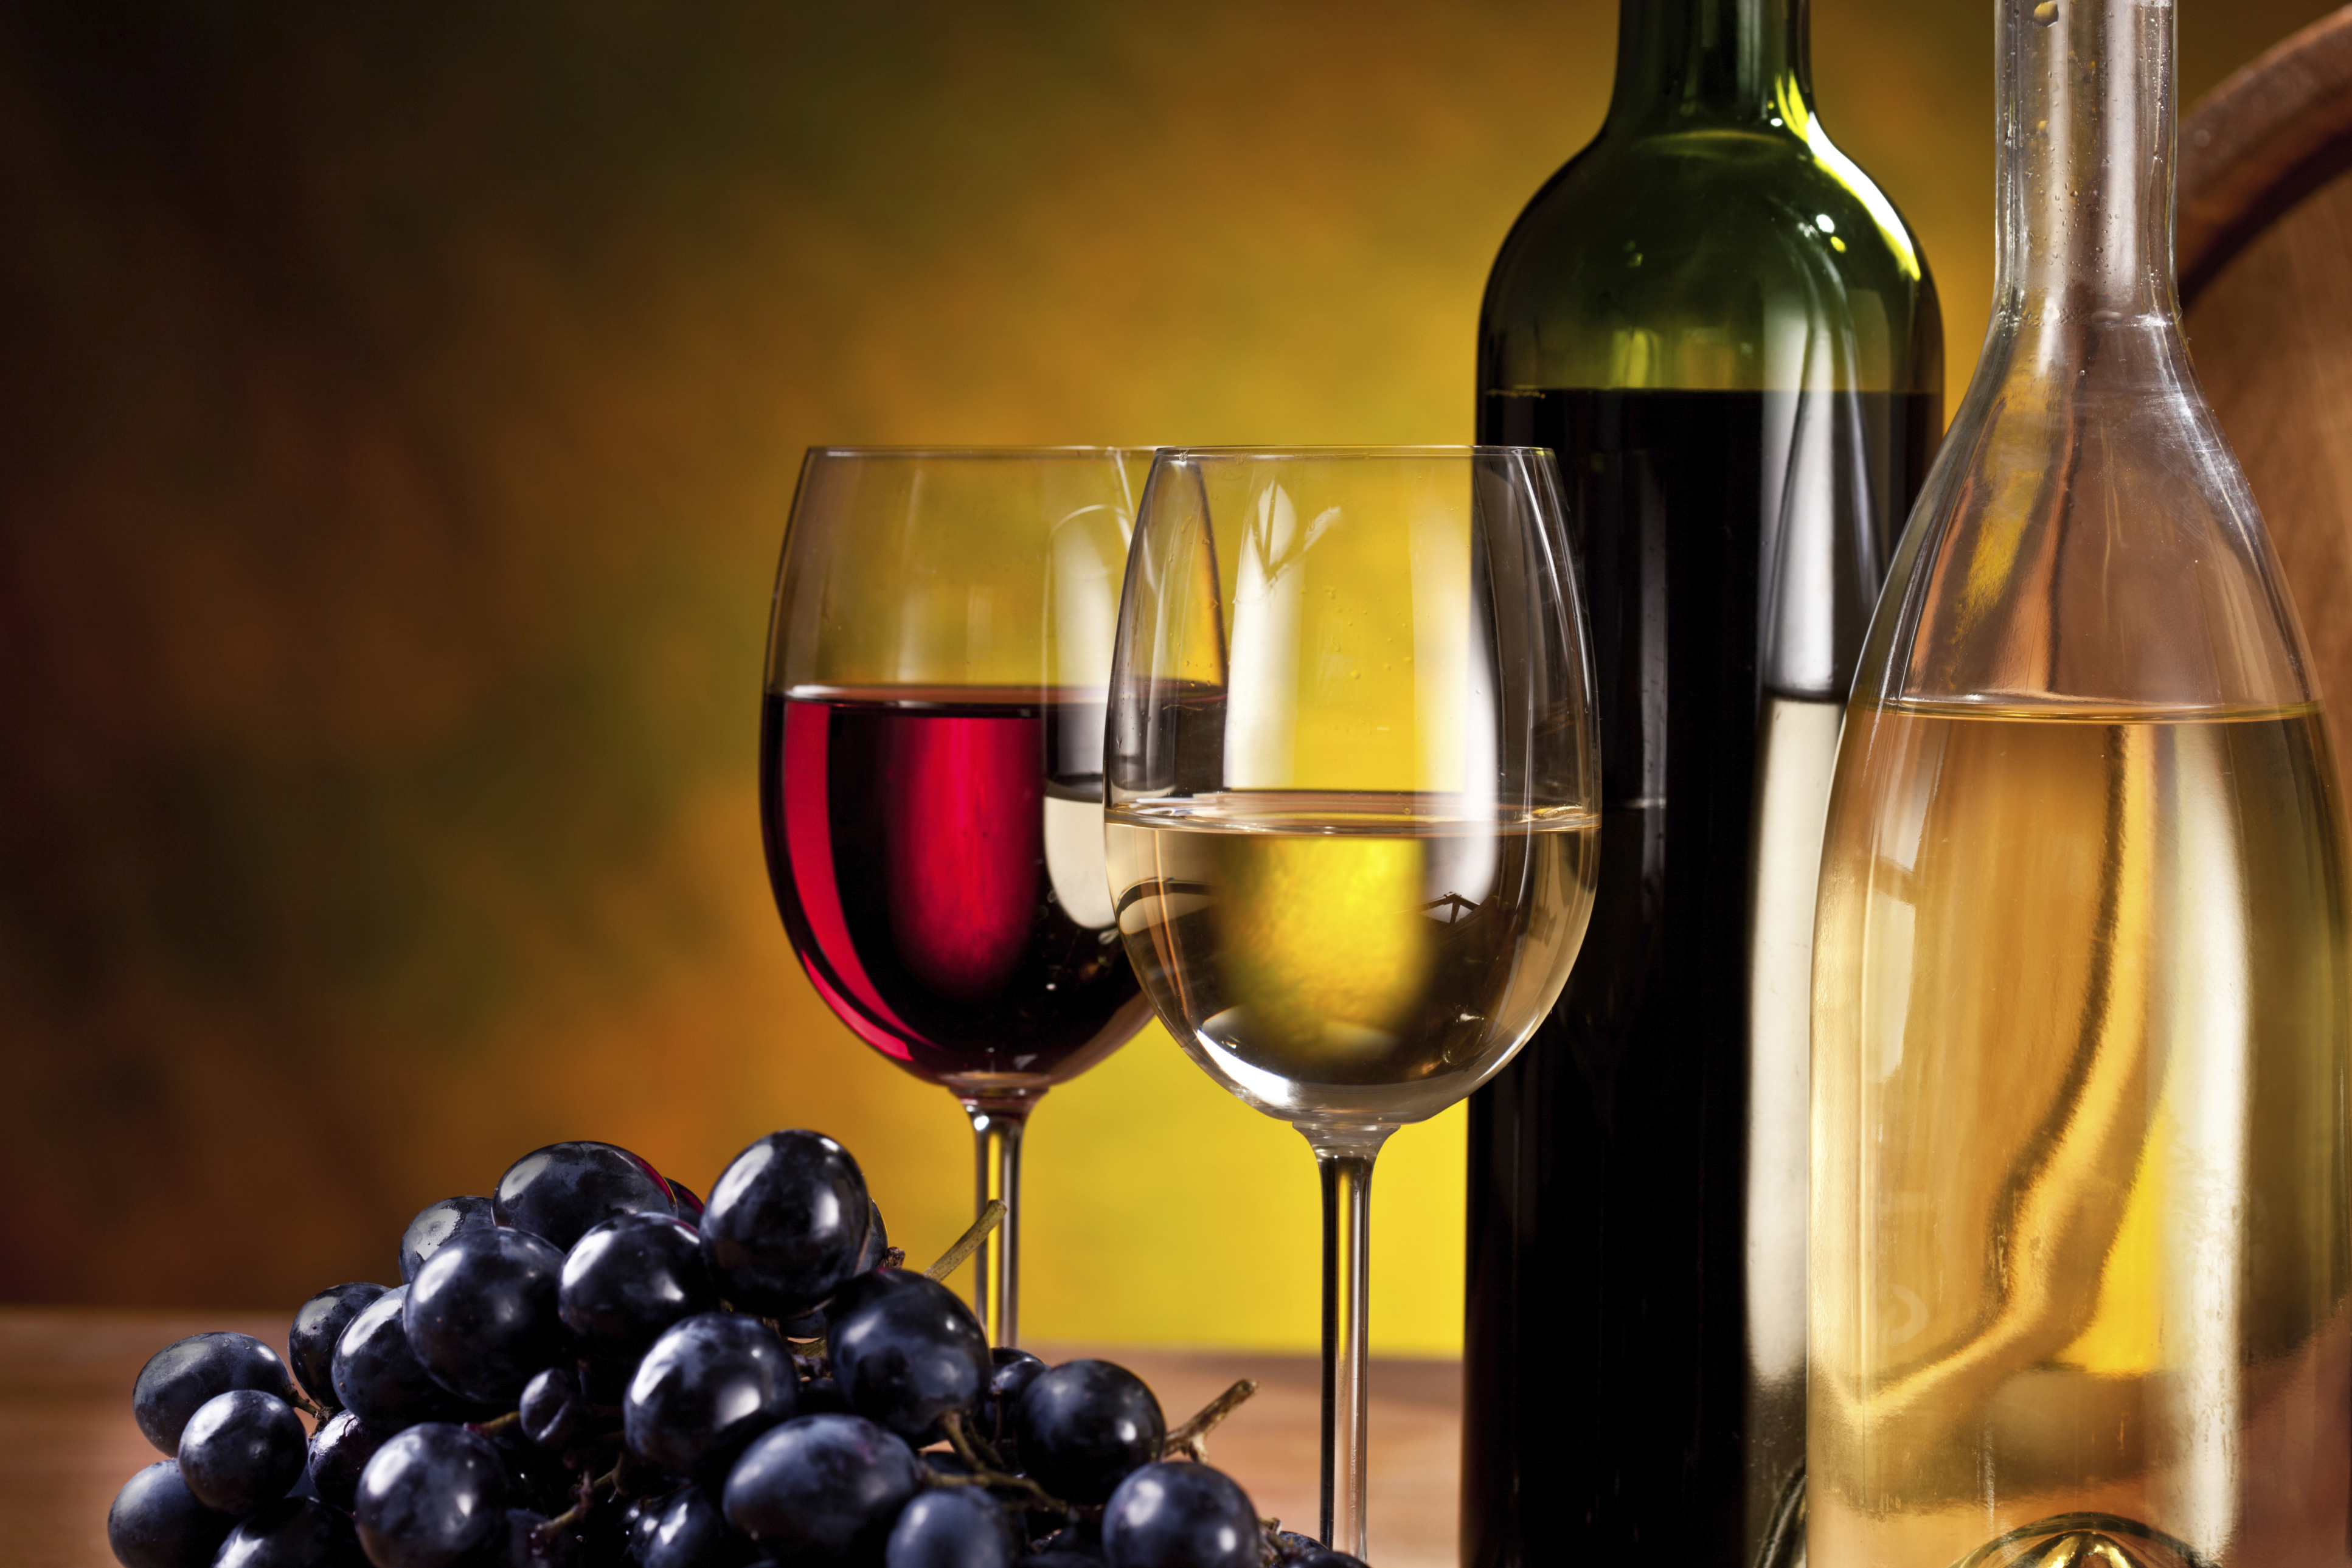 4К обои, натюрморт, синий виноград, красное и белое вино, бутылки, бокалы, алкоголь, десерт, 4К, still life, blue grapes, red and white wine, bottles, glasses, alcohol, dessert, 静物、青ブドウ、赤と白のワイン、ボトル、眼鏡、アルコール、デザート